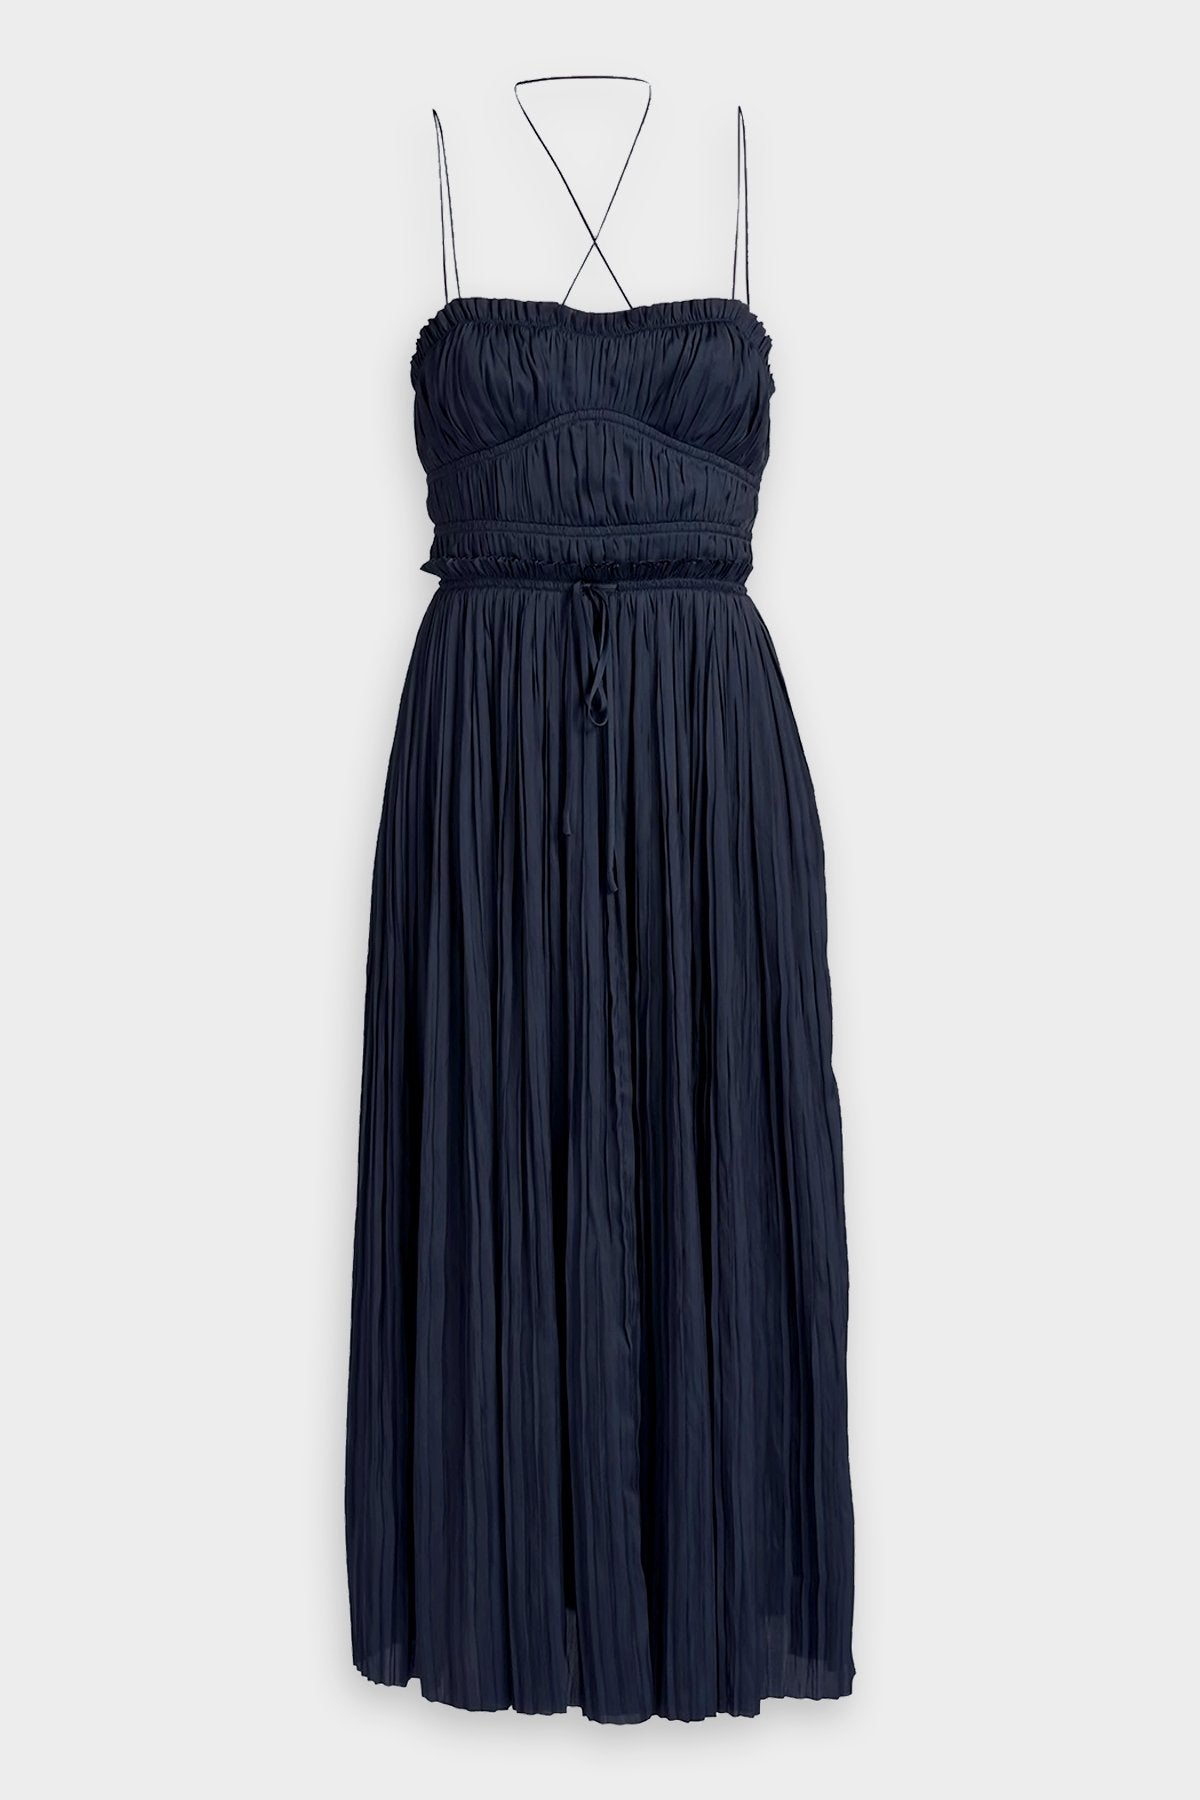 Neveah Dress in Midnight - shop-olivia.com